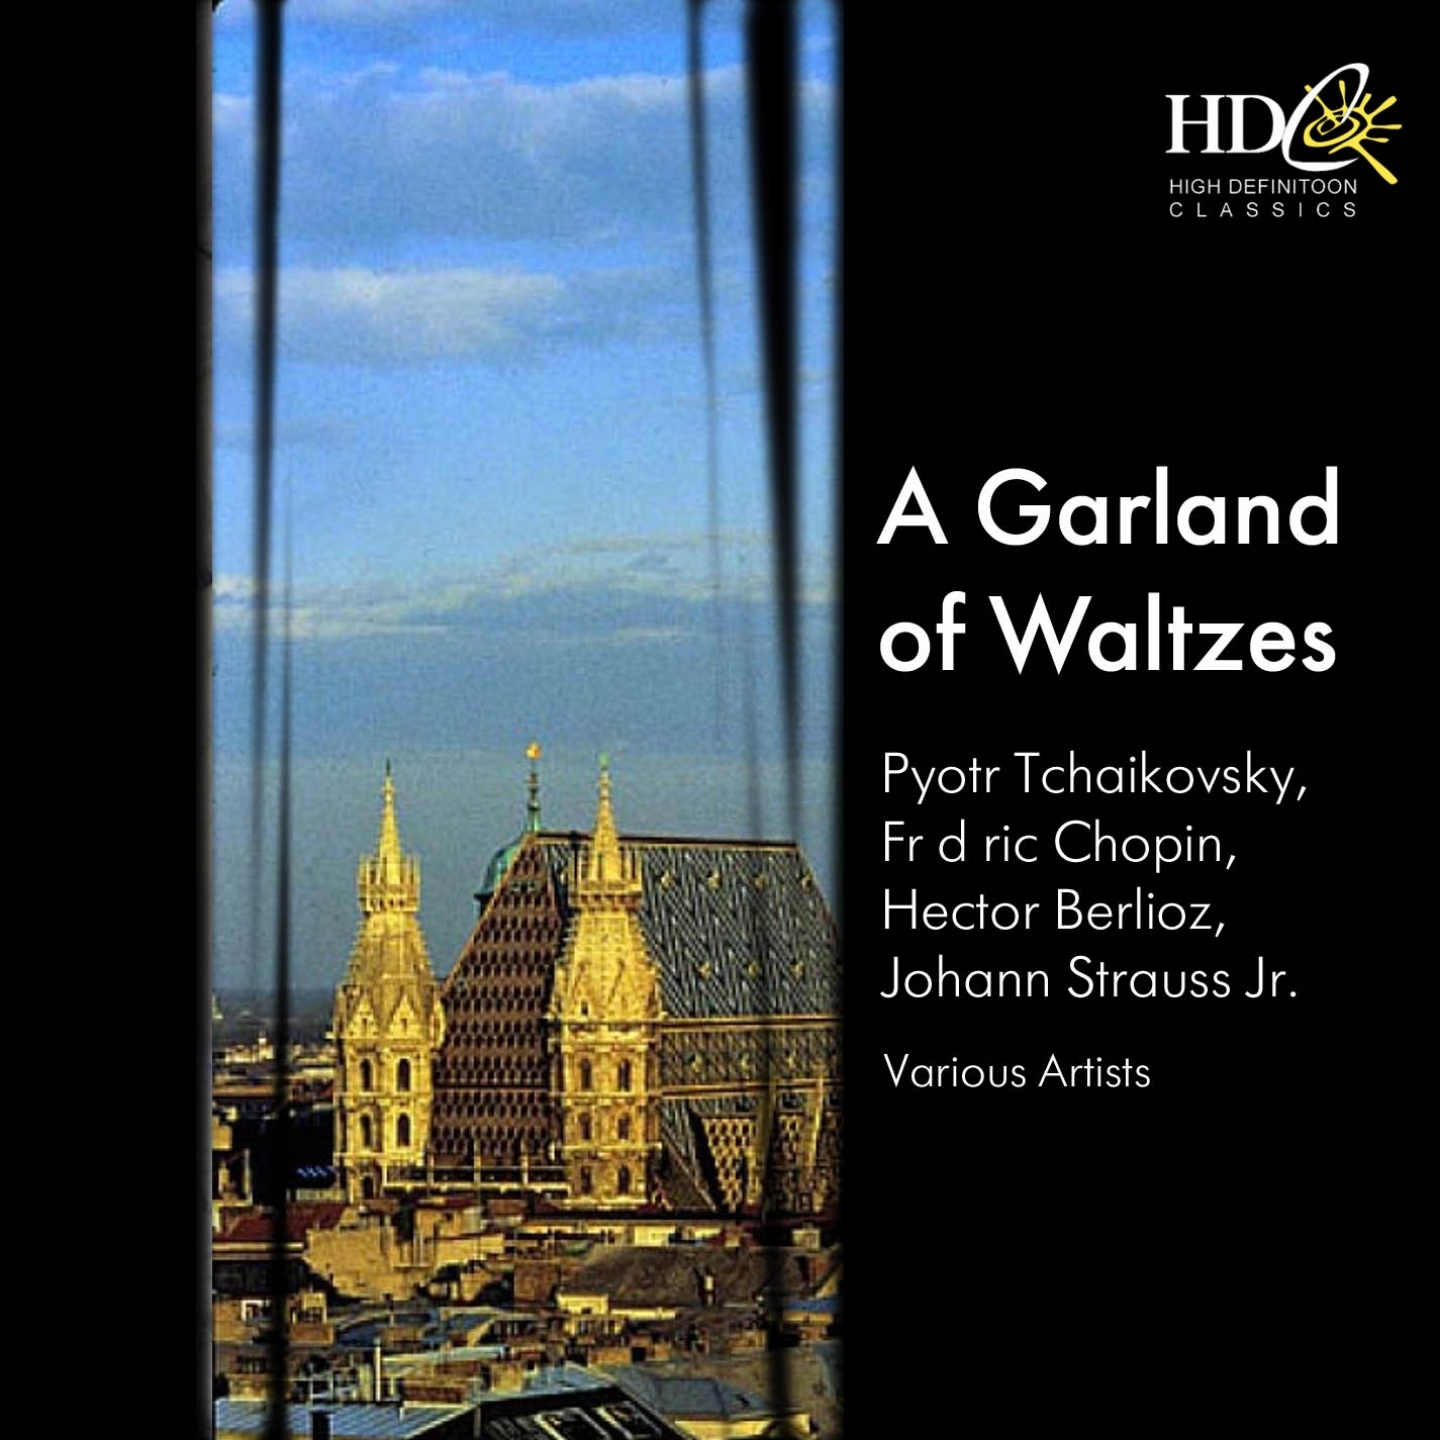 Waltz in E flat major, Grande Valse Brilliante, Op. 18